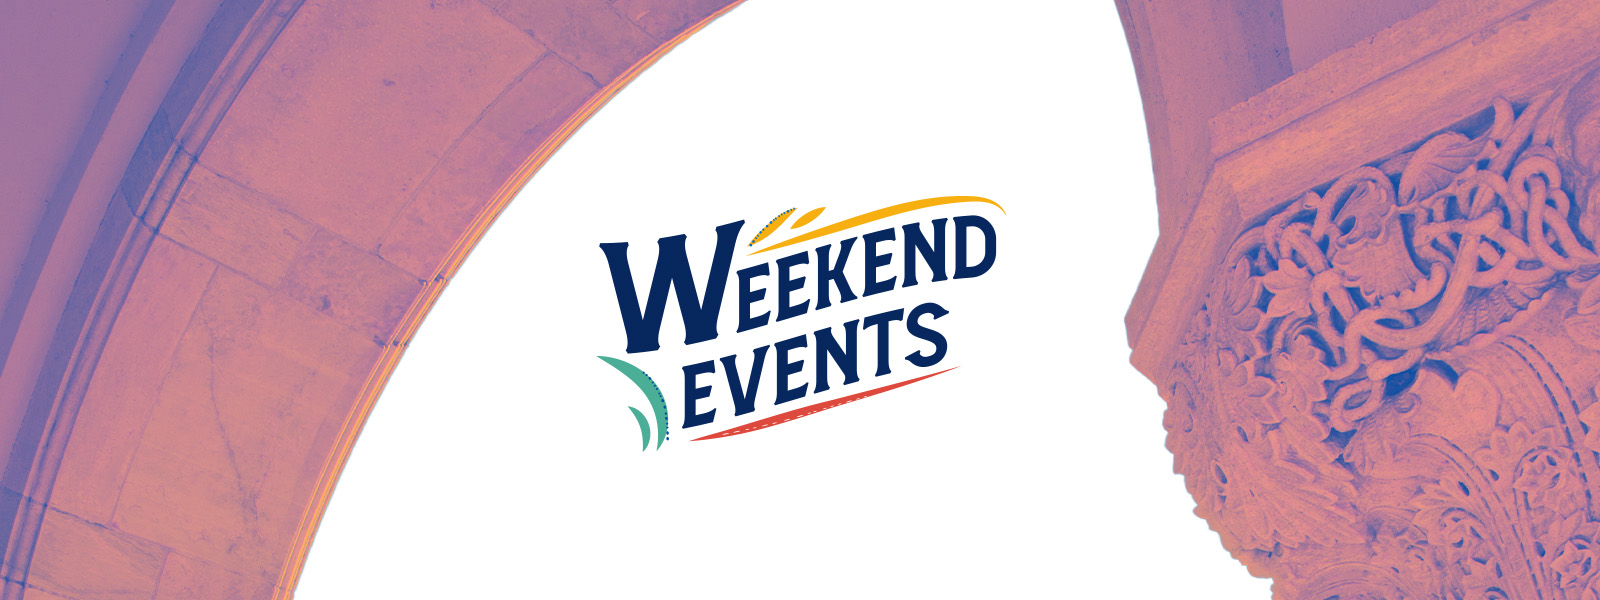 Alumni Weekend Events